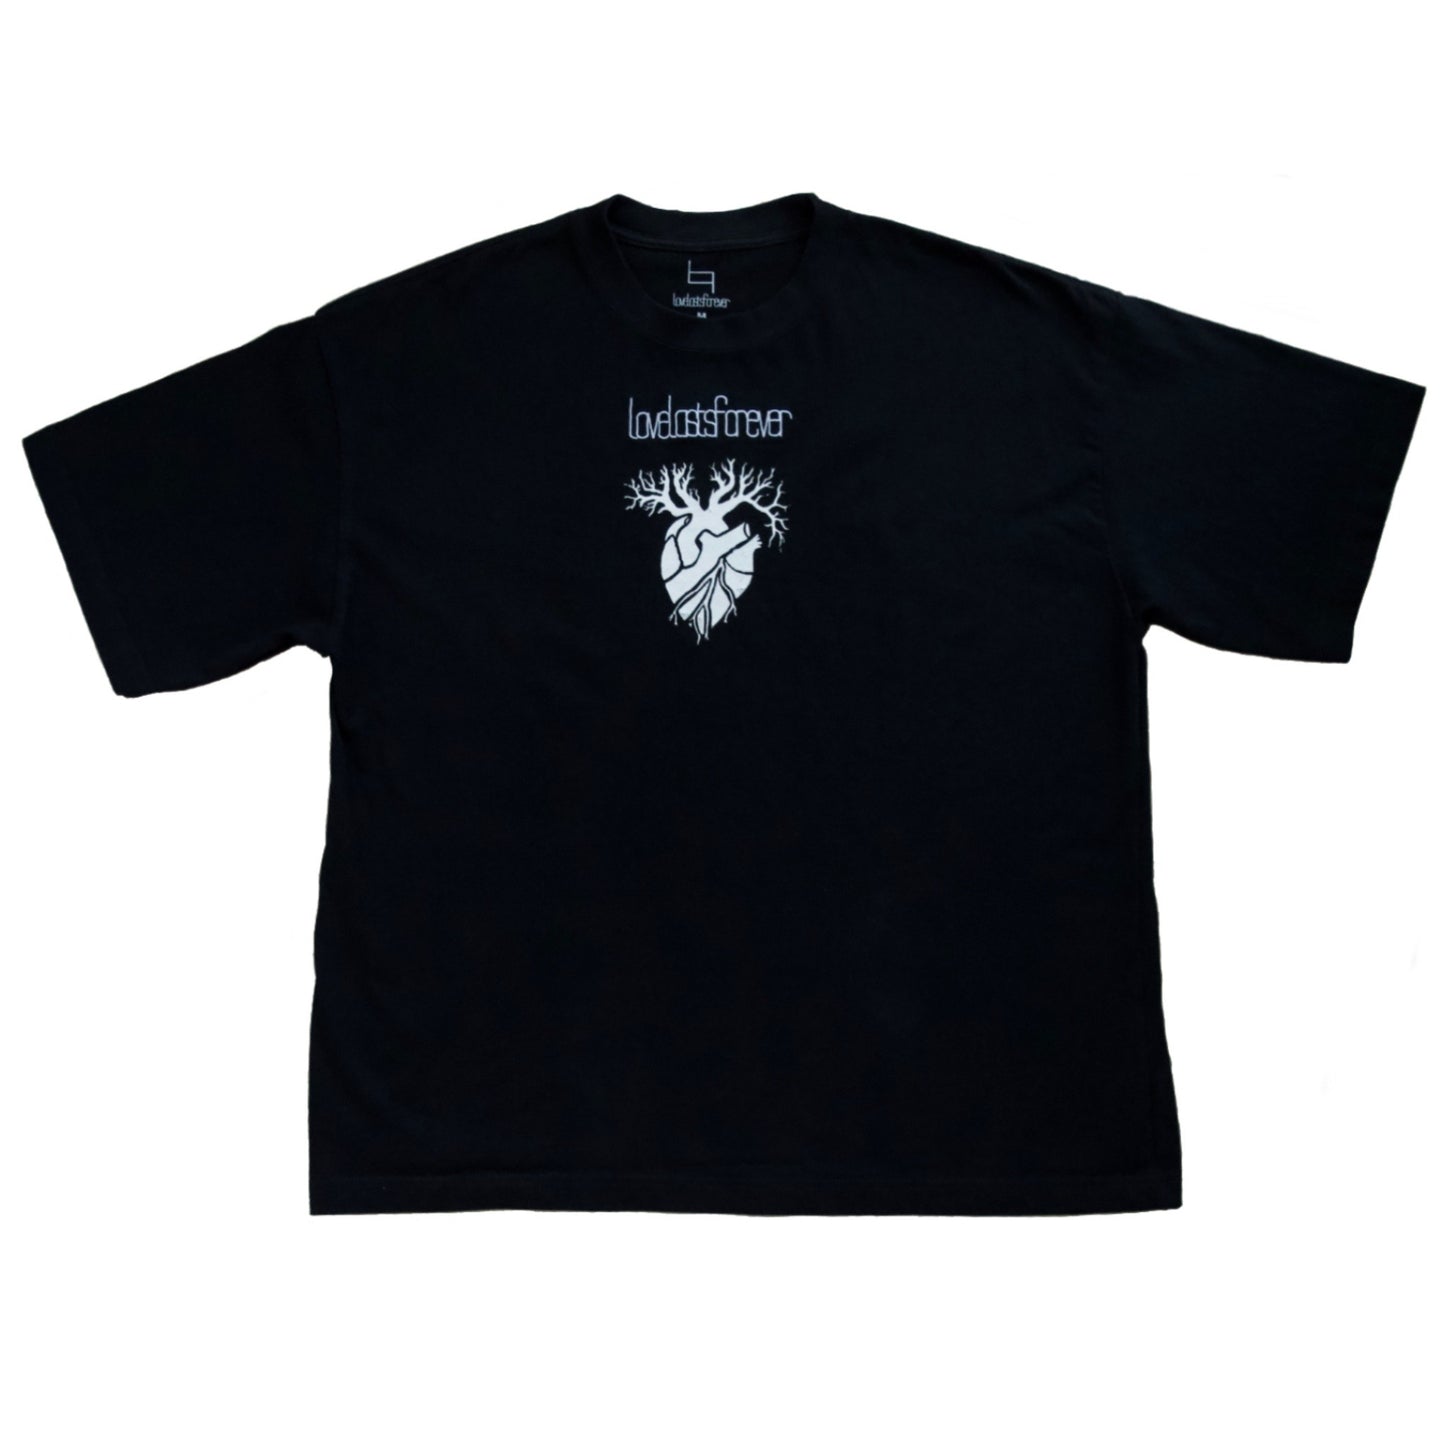 Let love control your heart Unisex T-Shirt (Collectors edition)